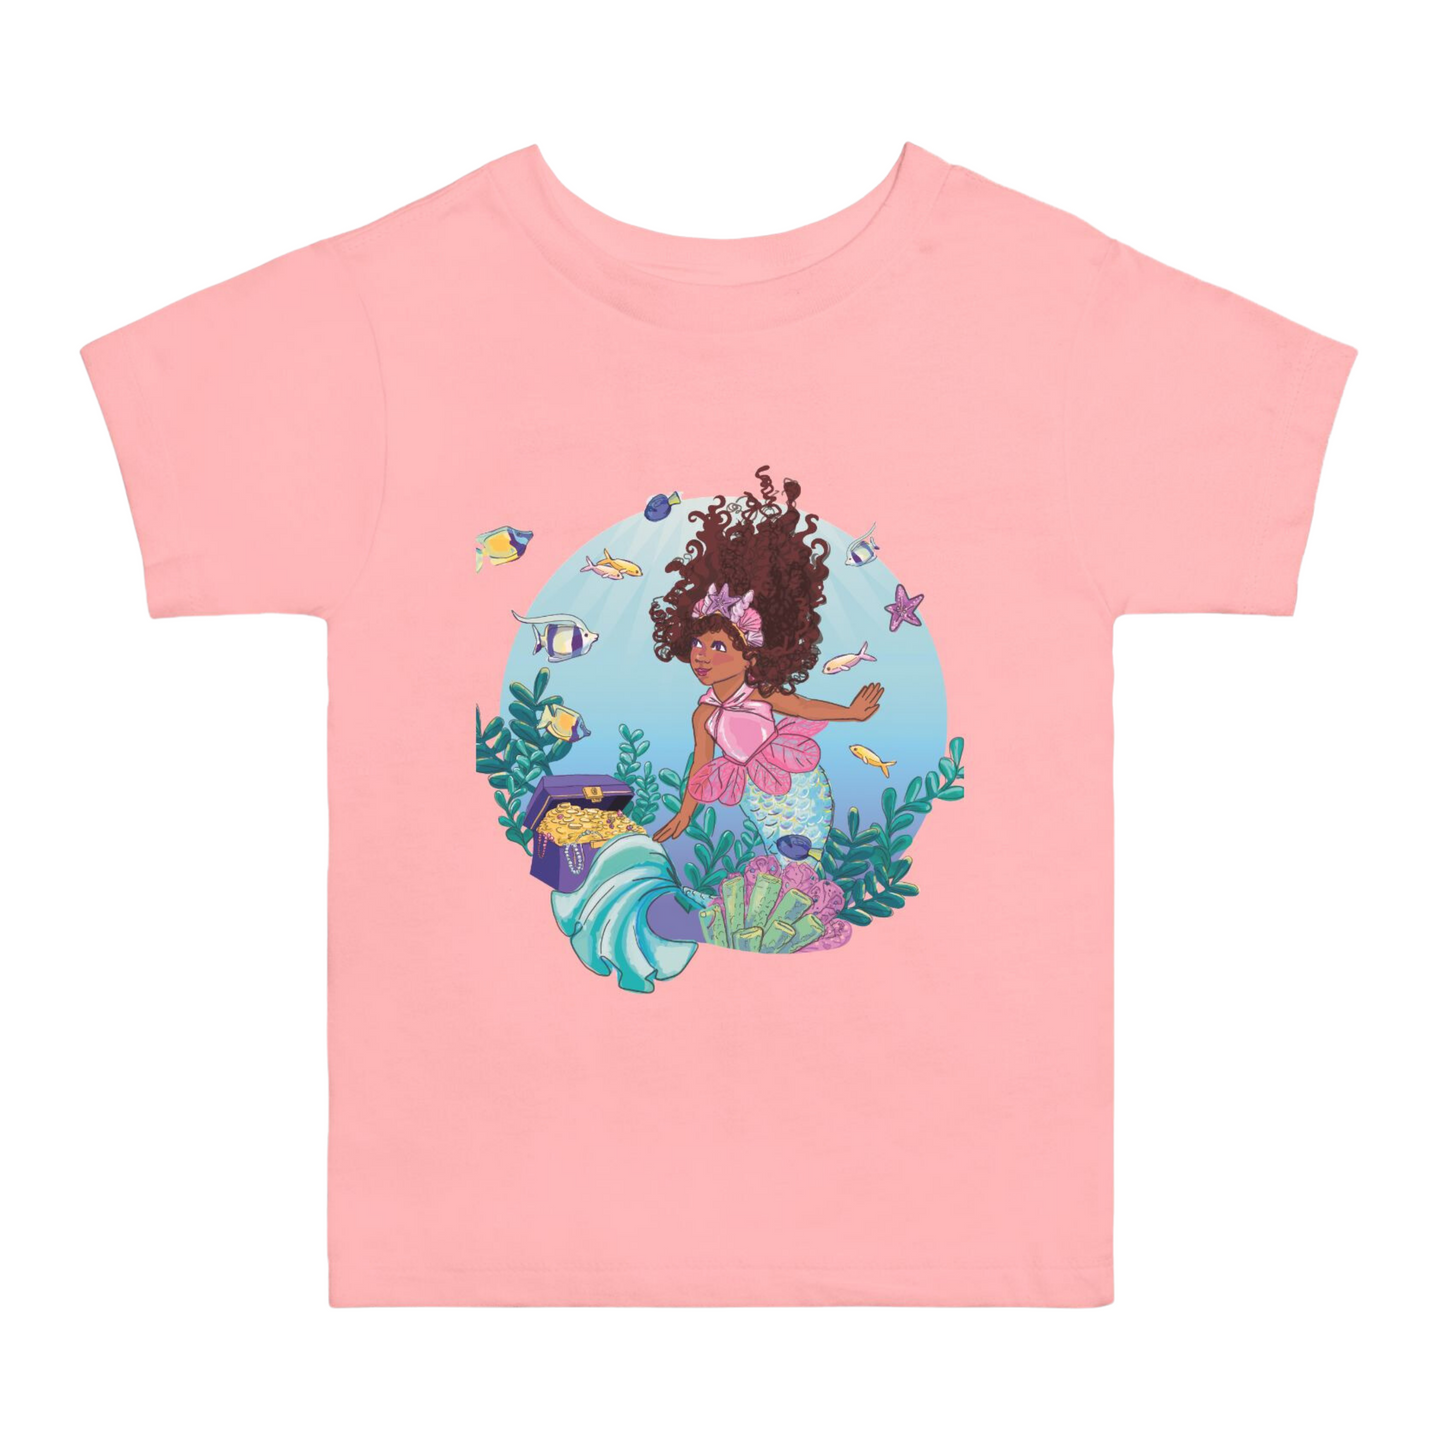 Toddler Mermaid Short Sleeve Shirt (2T-5T)